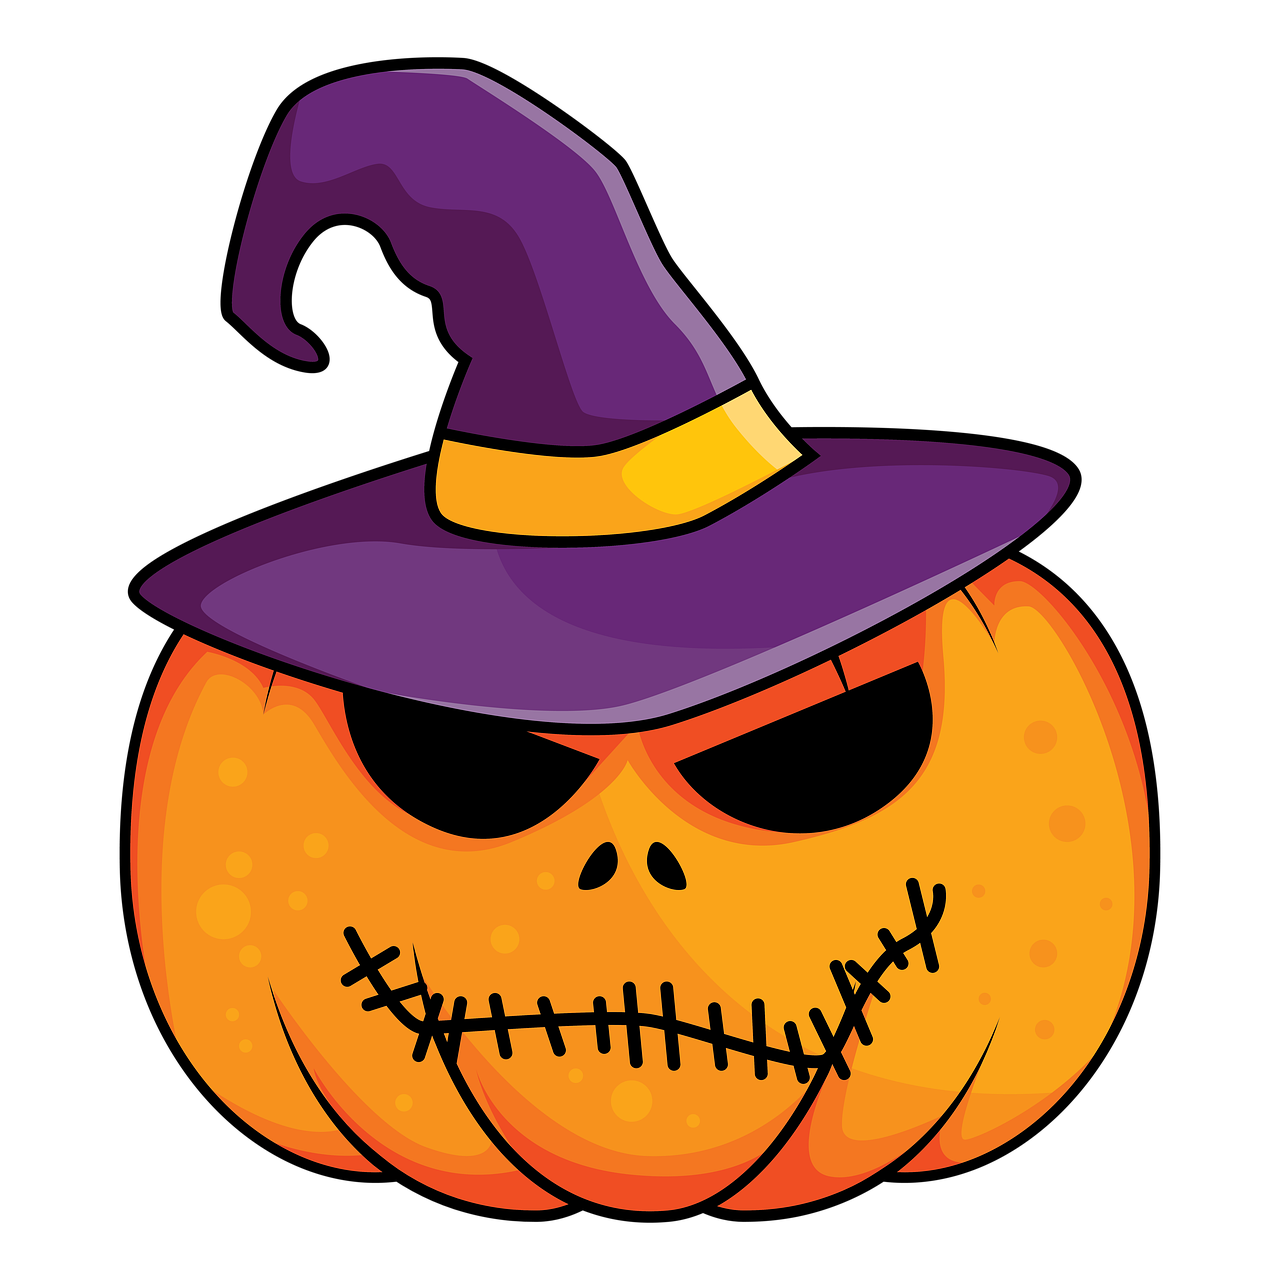 Halloween Horror Scary - Free image on Pixabay